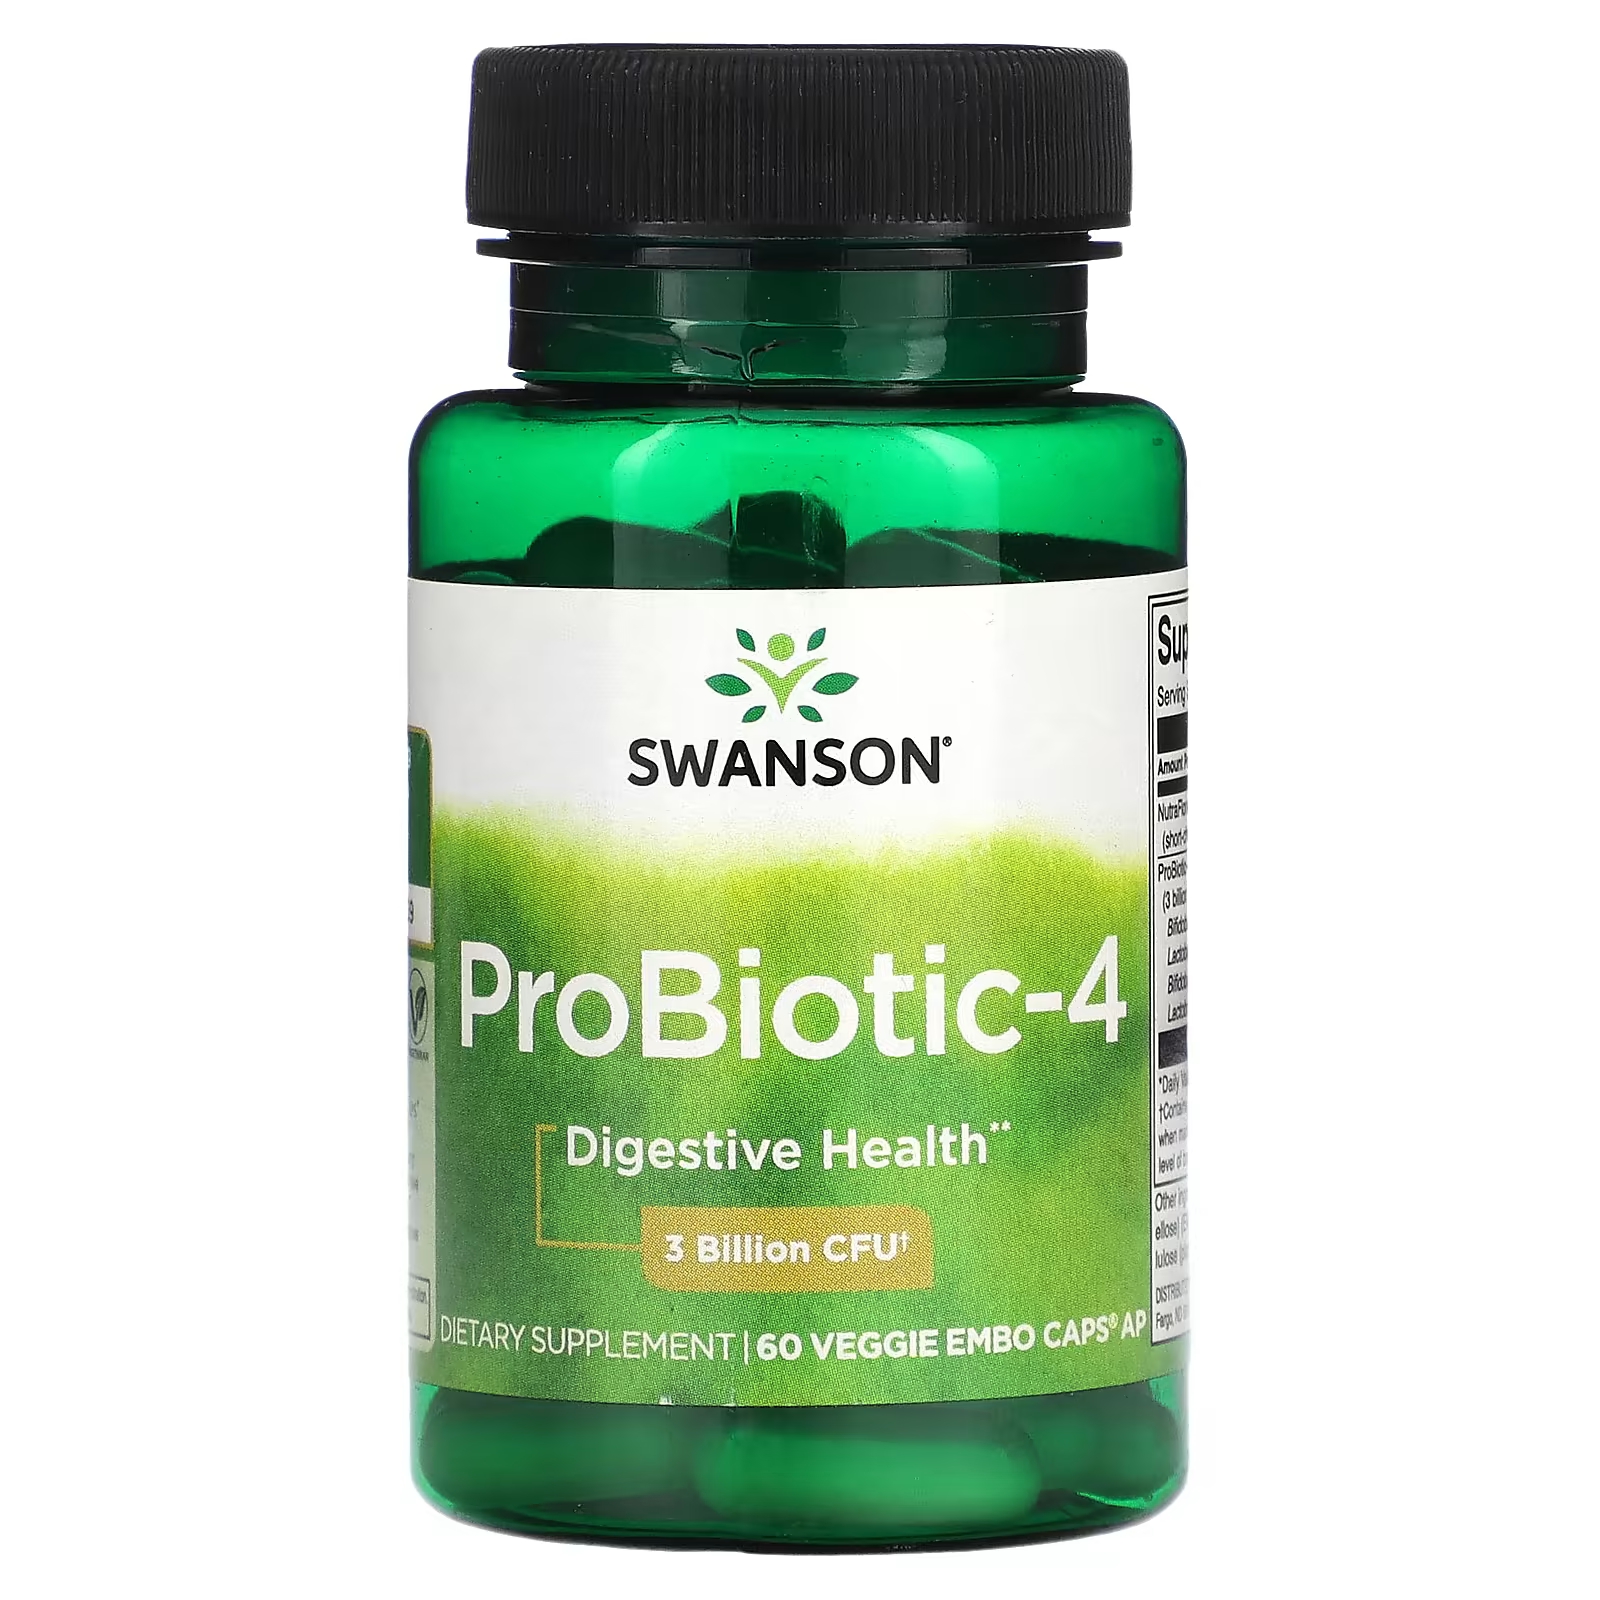 Пищевая добавка Swanson Probiotic 4.3 Billion CFU, 60 капсул